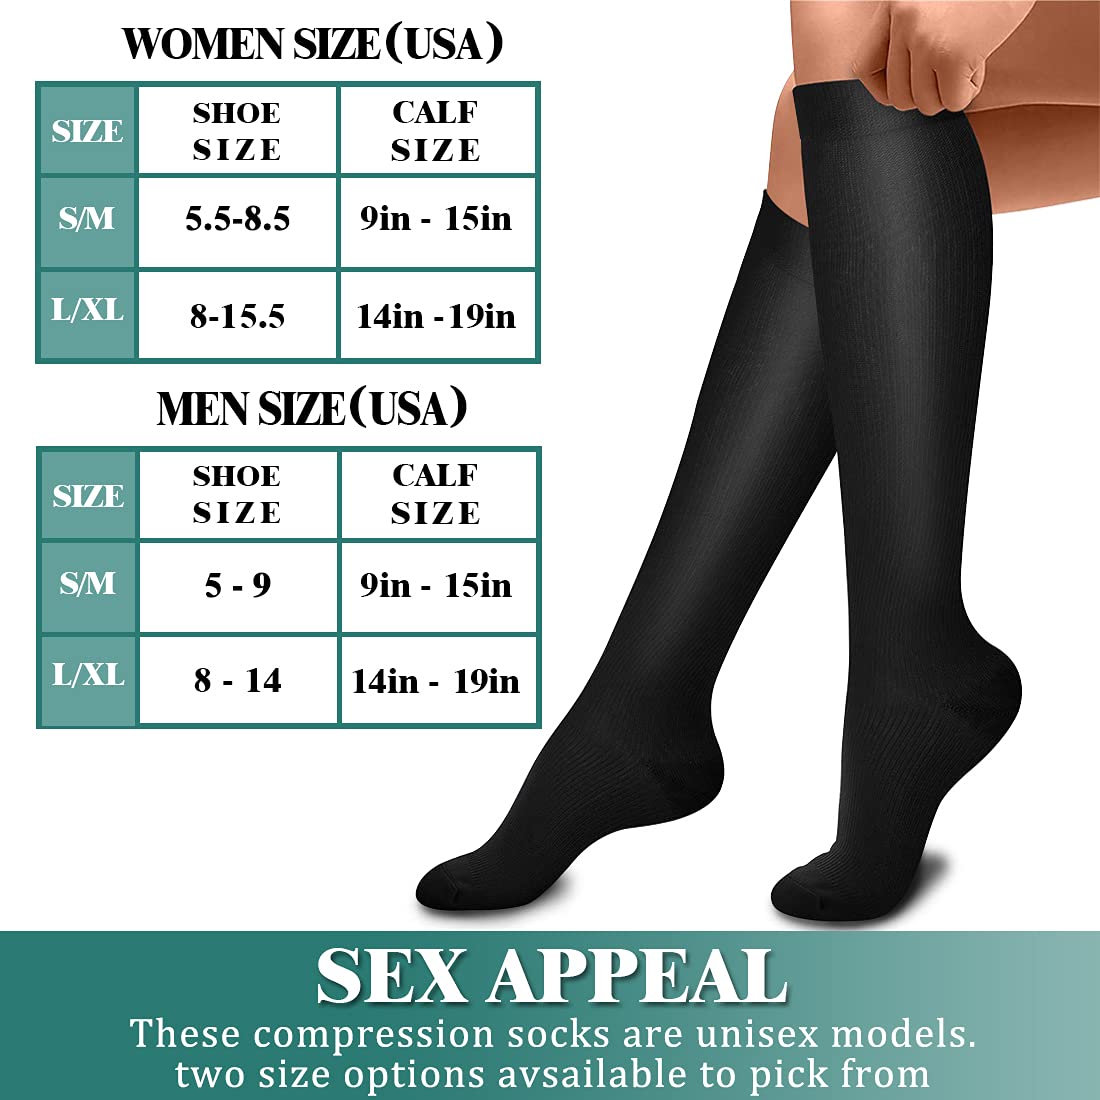 Laite Hebe 3 Pack Medical Compression Sock-Compression Sock for Women and Men-Best for Running,Nursing,Sports